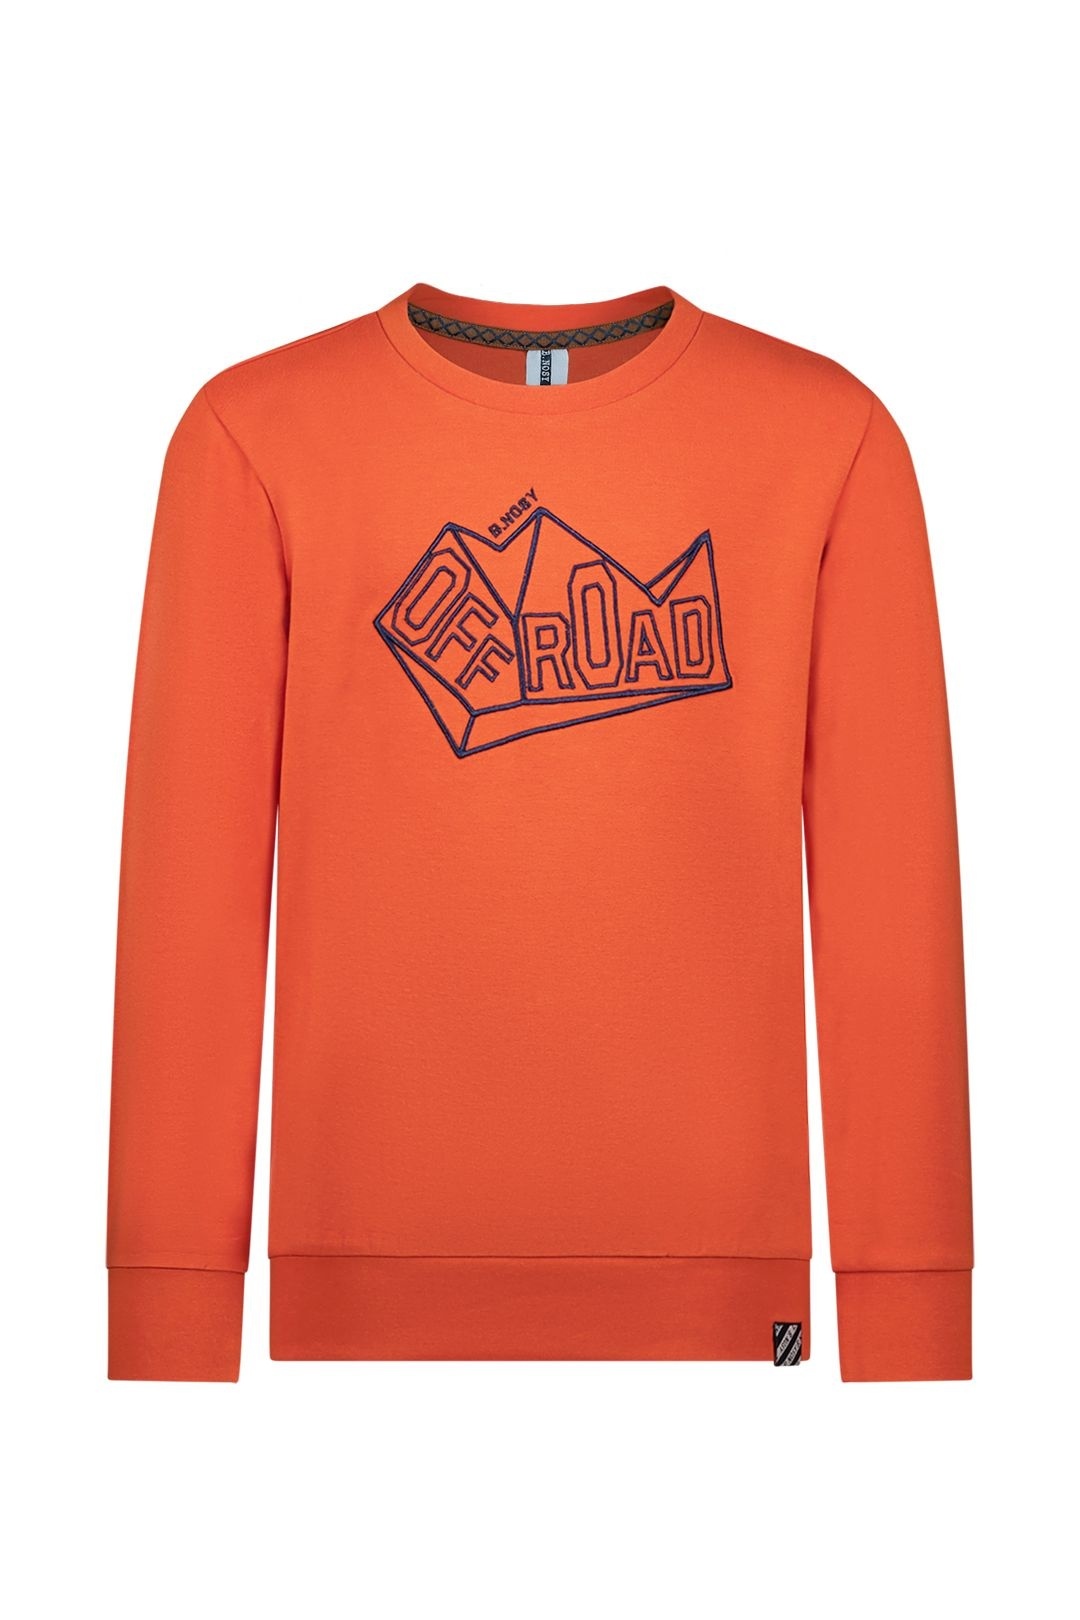 Jongens sweater oranje - Olivier - Pompoen